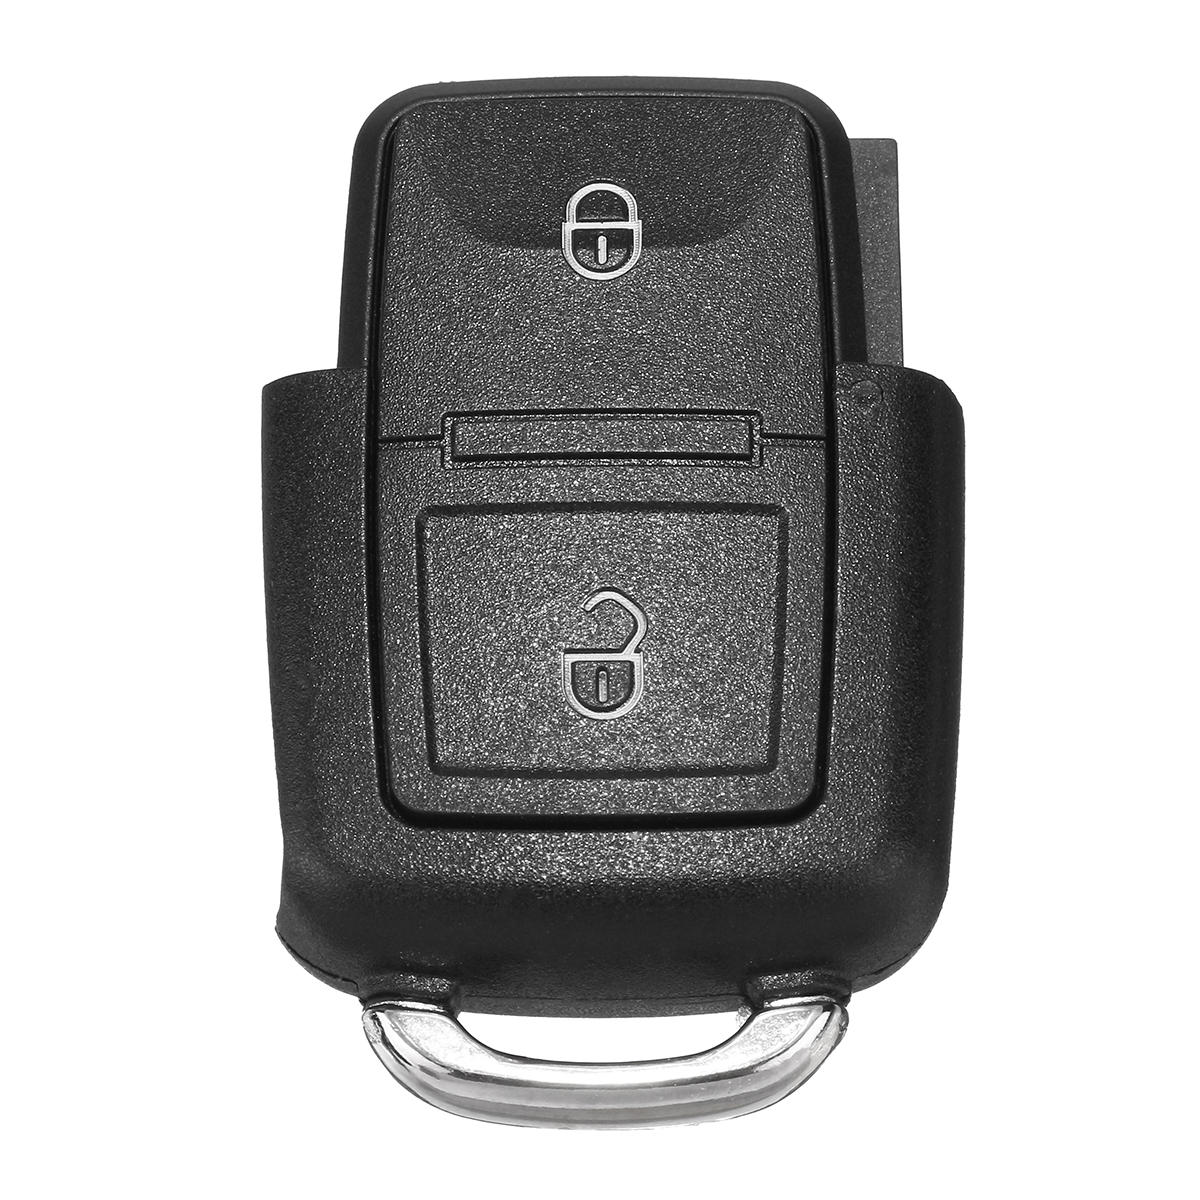 2 botones Control remoto llavero Caso Shell Batería kits para VW Golf Passat Bora MK4